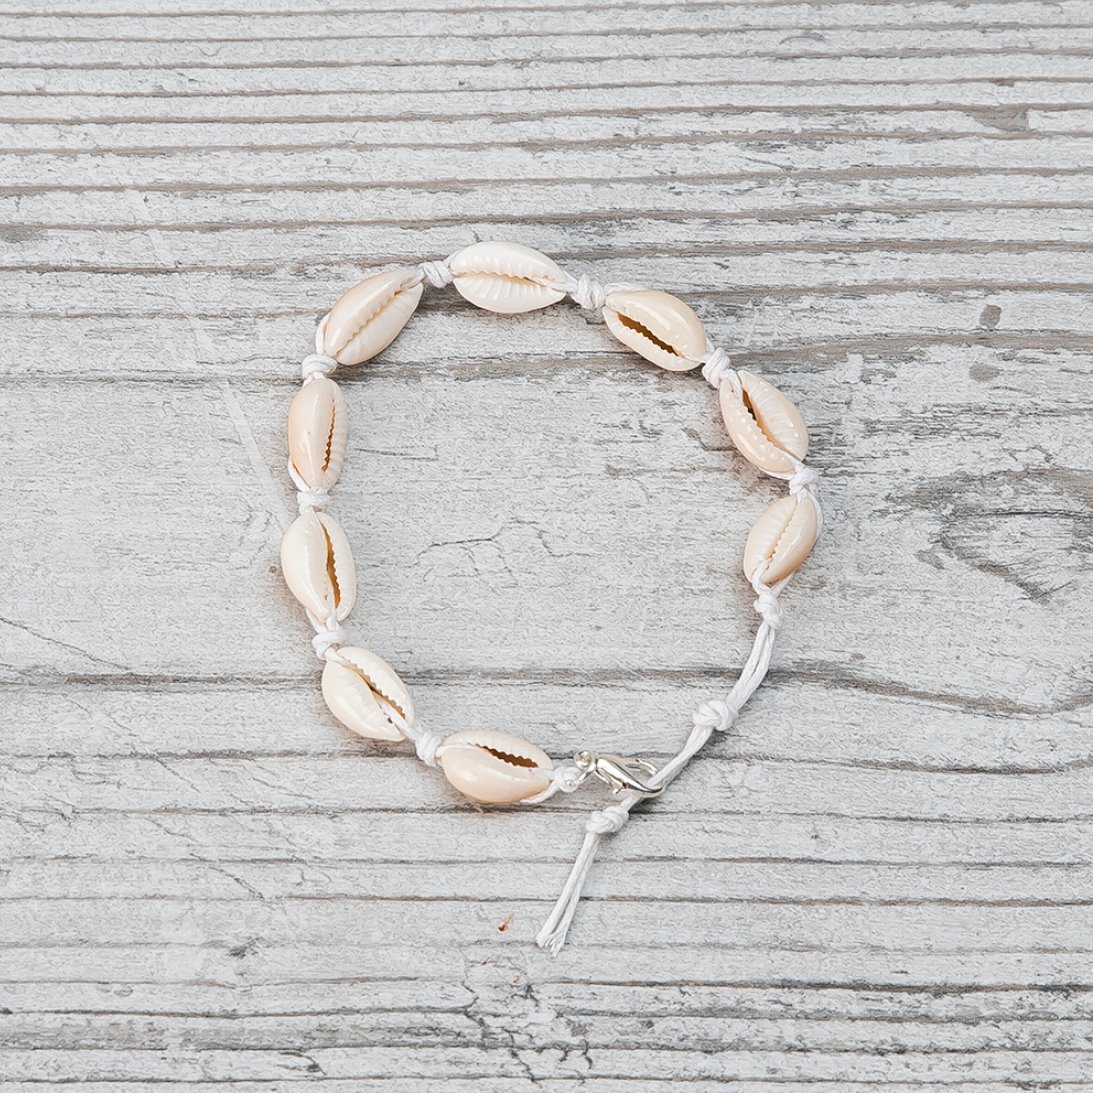 Knotted bracelet with seashells Diy6017-step5.jpg